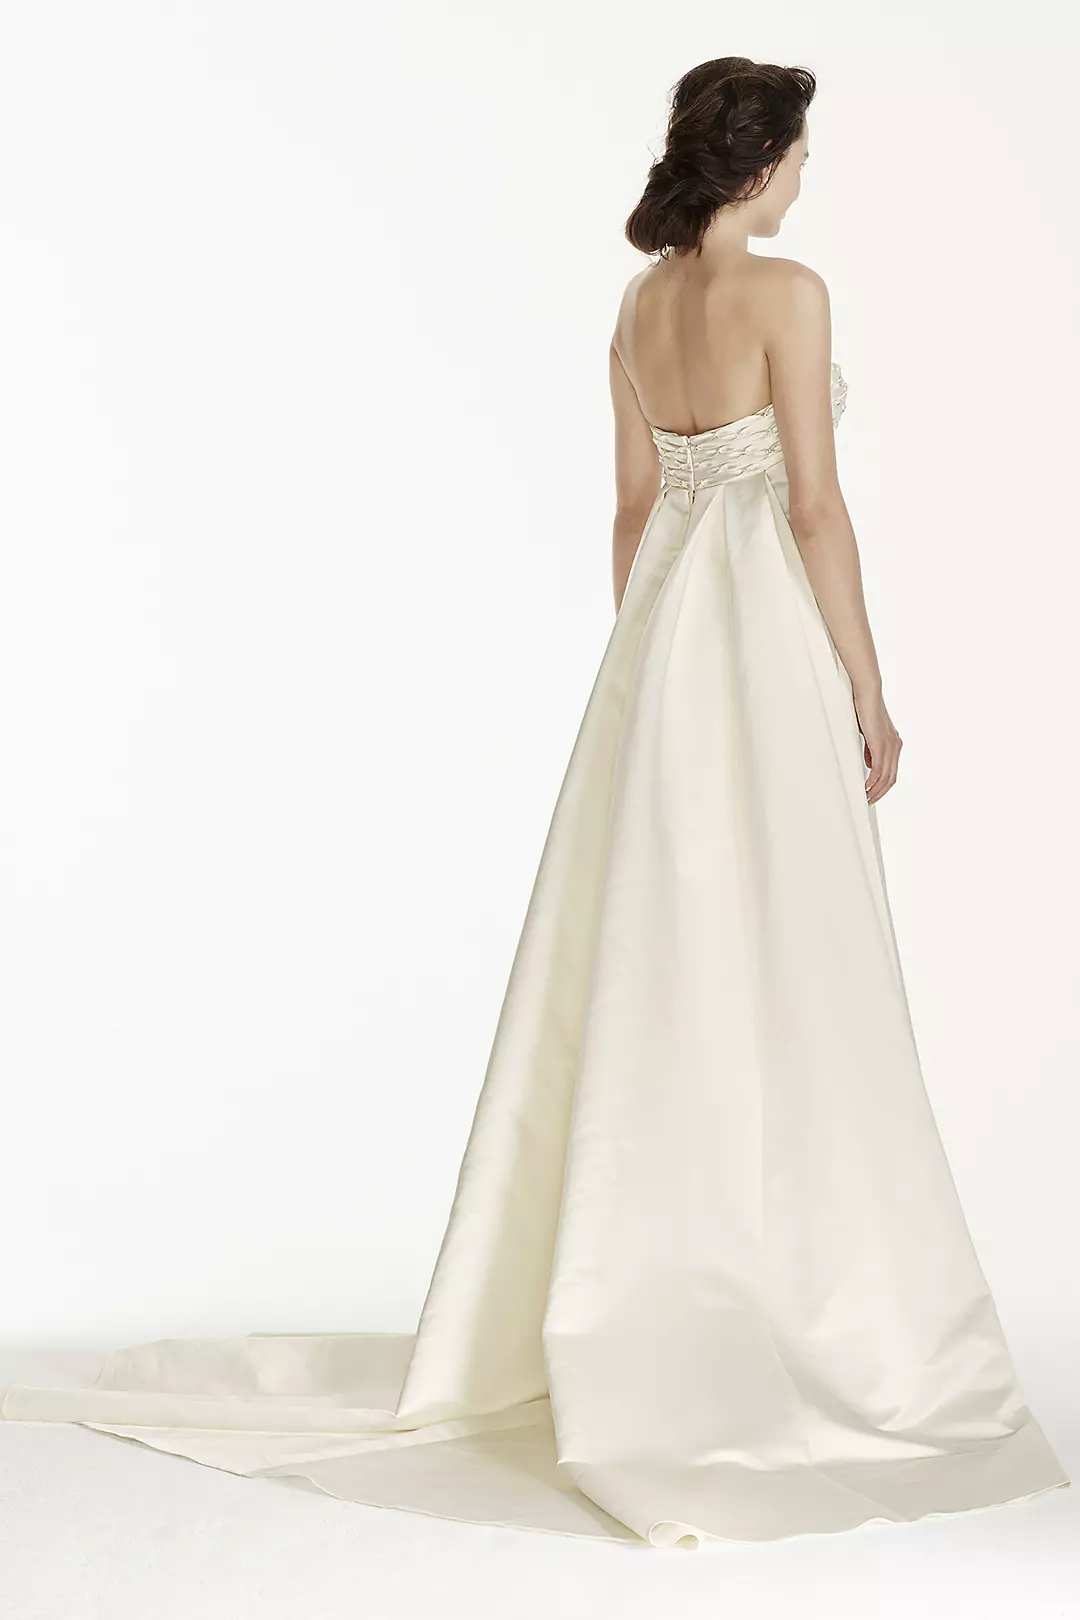 Jewel A-line Wedding Dress with Watteau Train Image 2